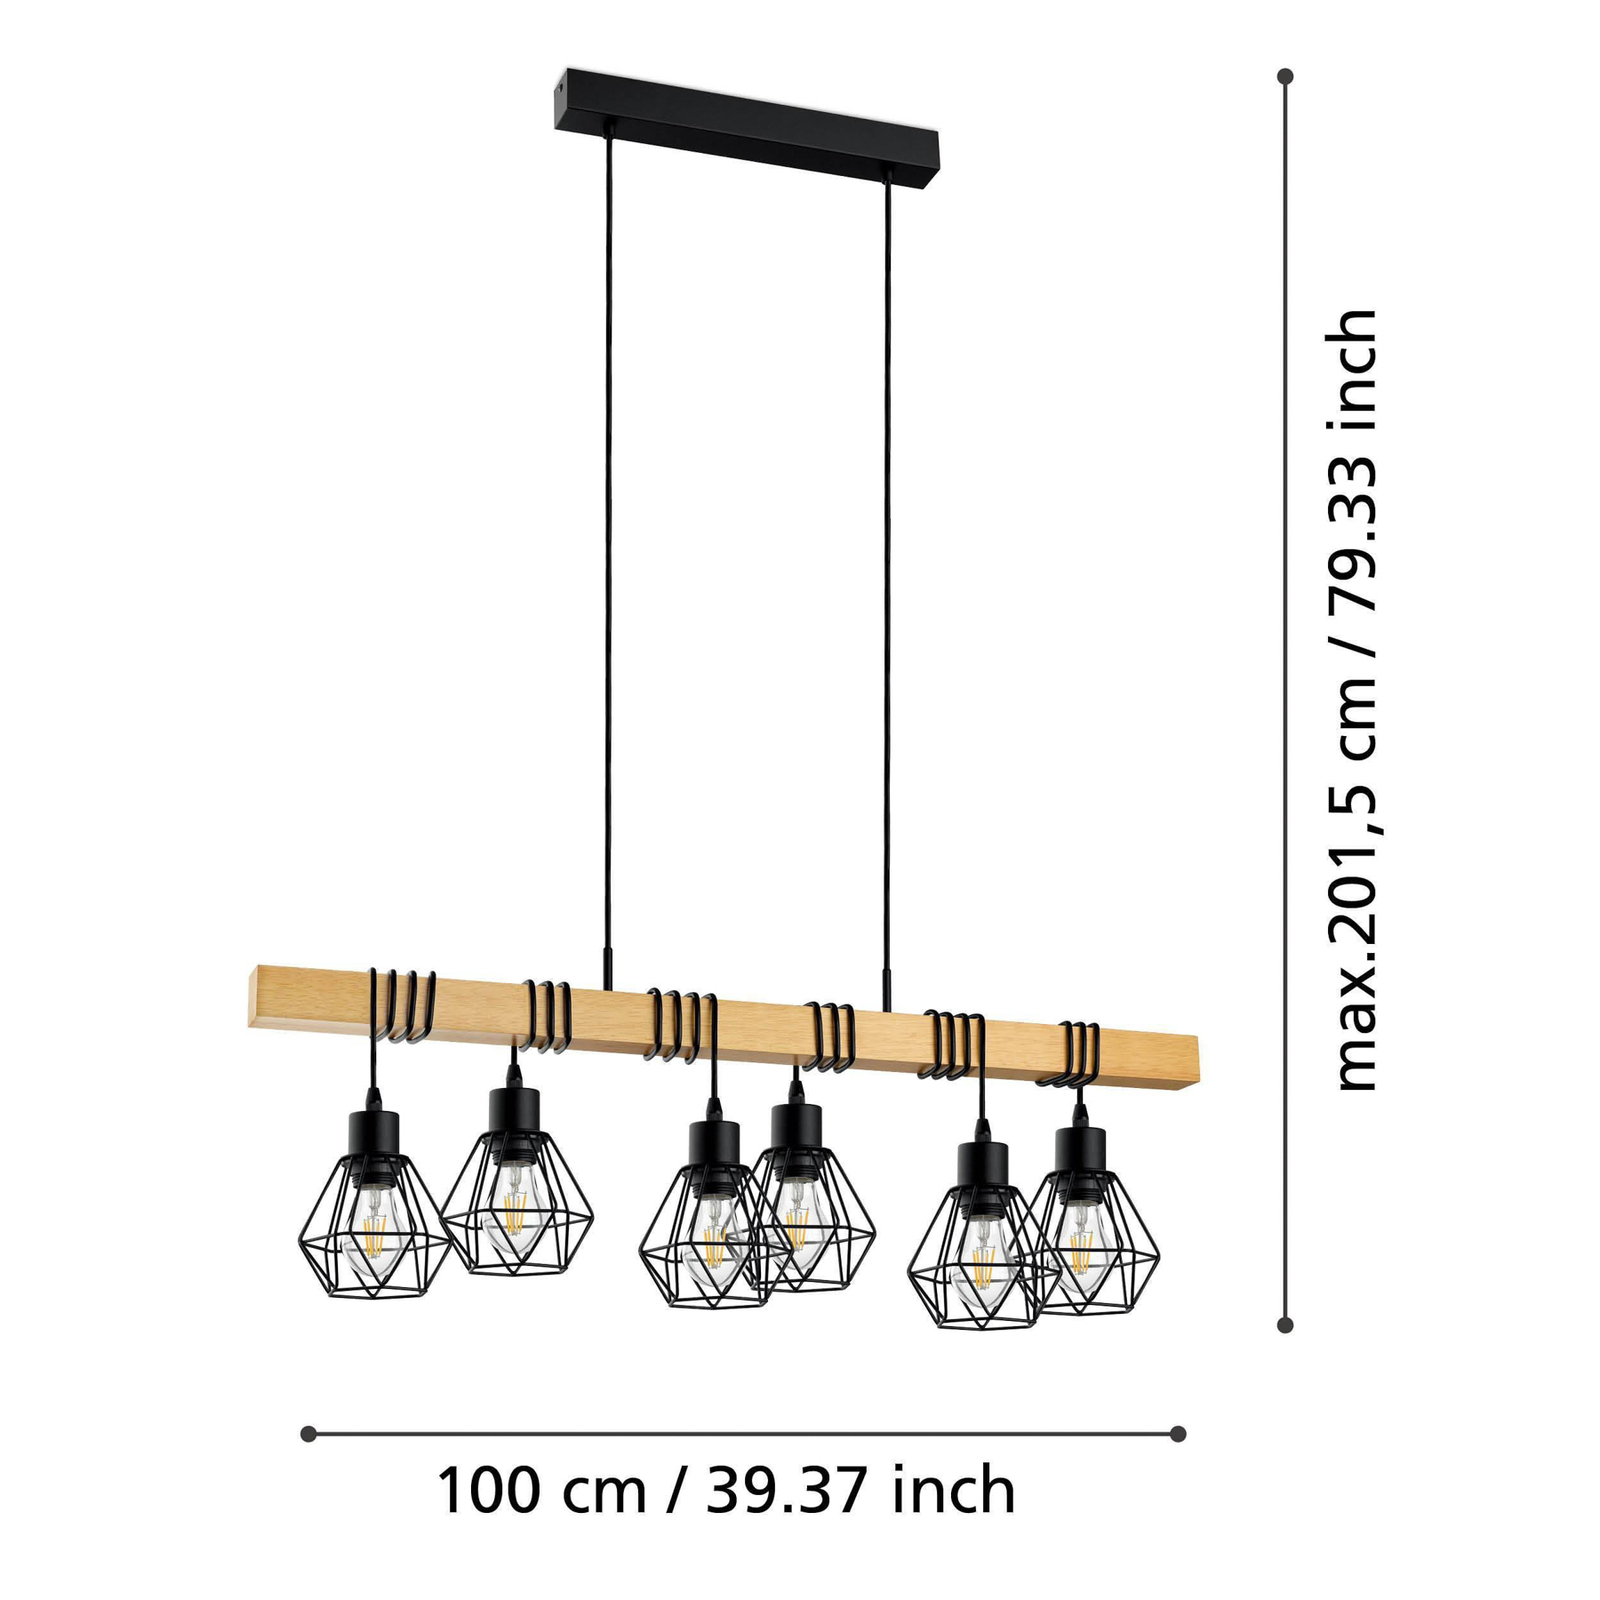 Townshend pendant light, length 100 cm, black/oak, 6-bulb.